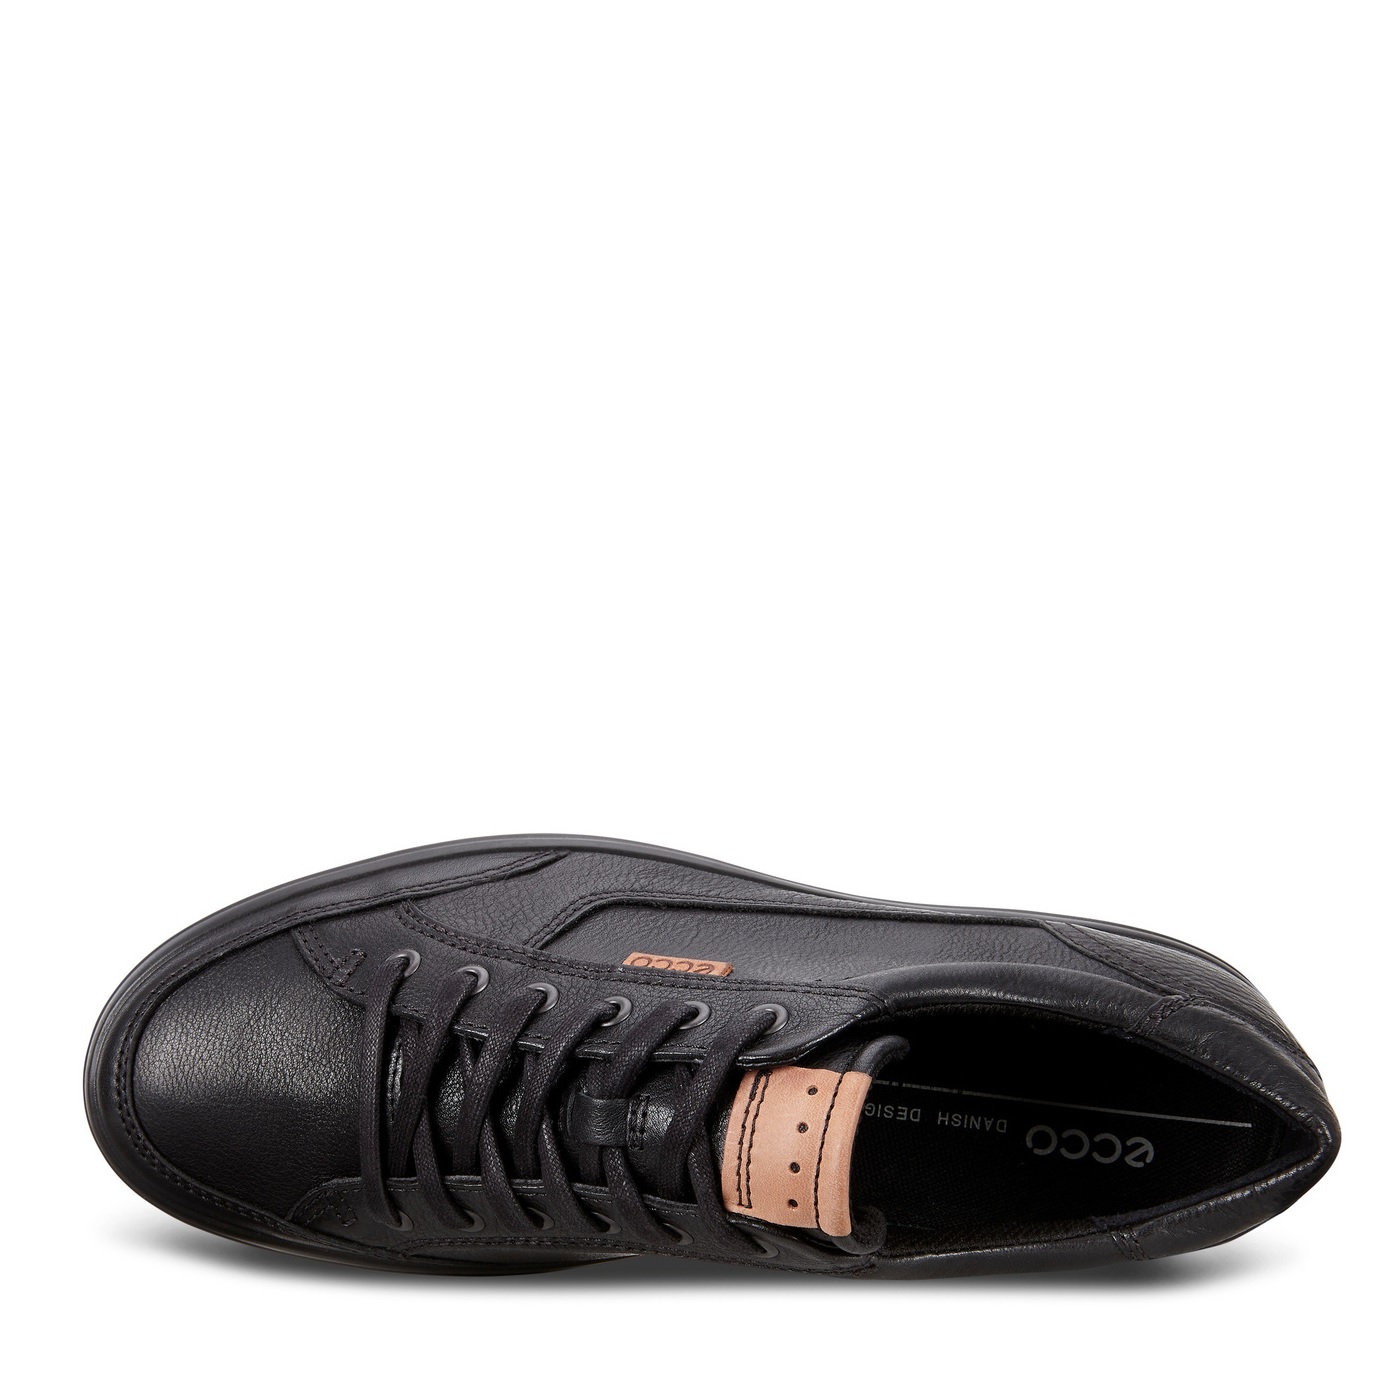 Ecco Mens Soft 7 Black Trainer Styled Shoe - Shoes Dorchester